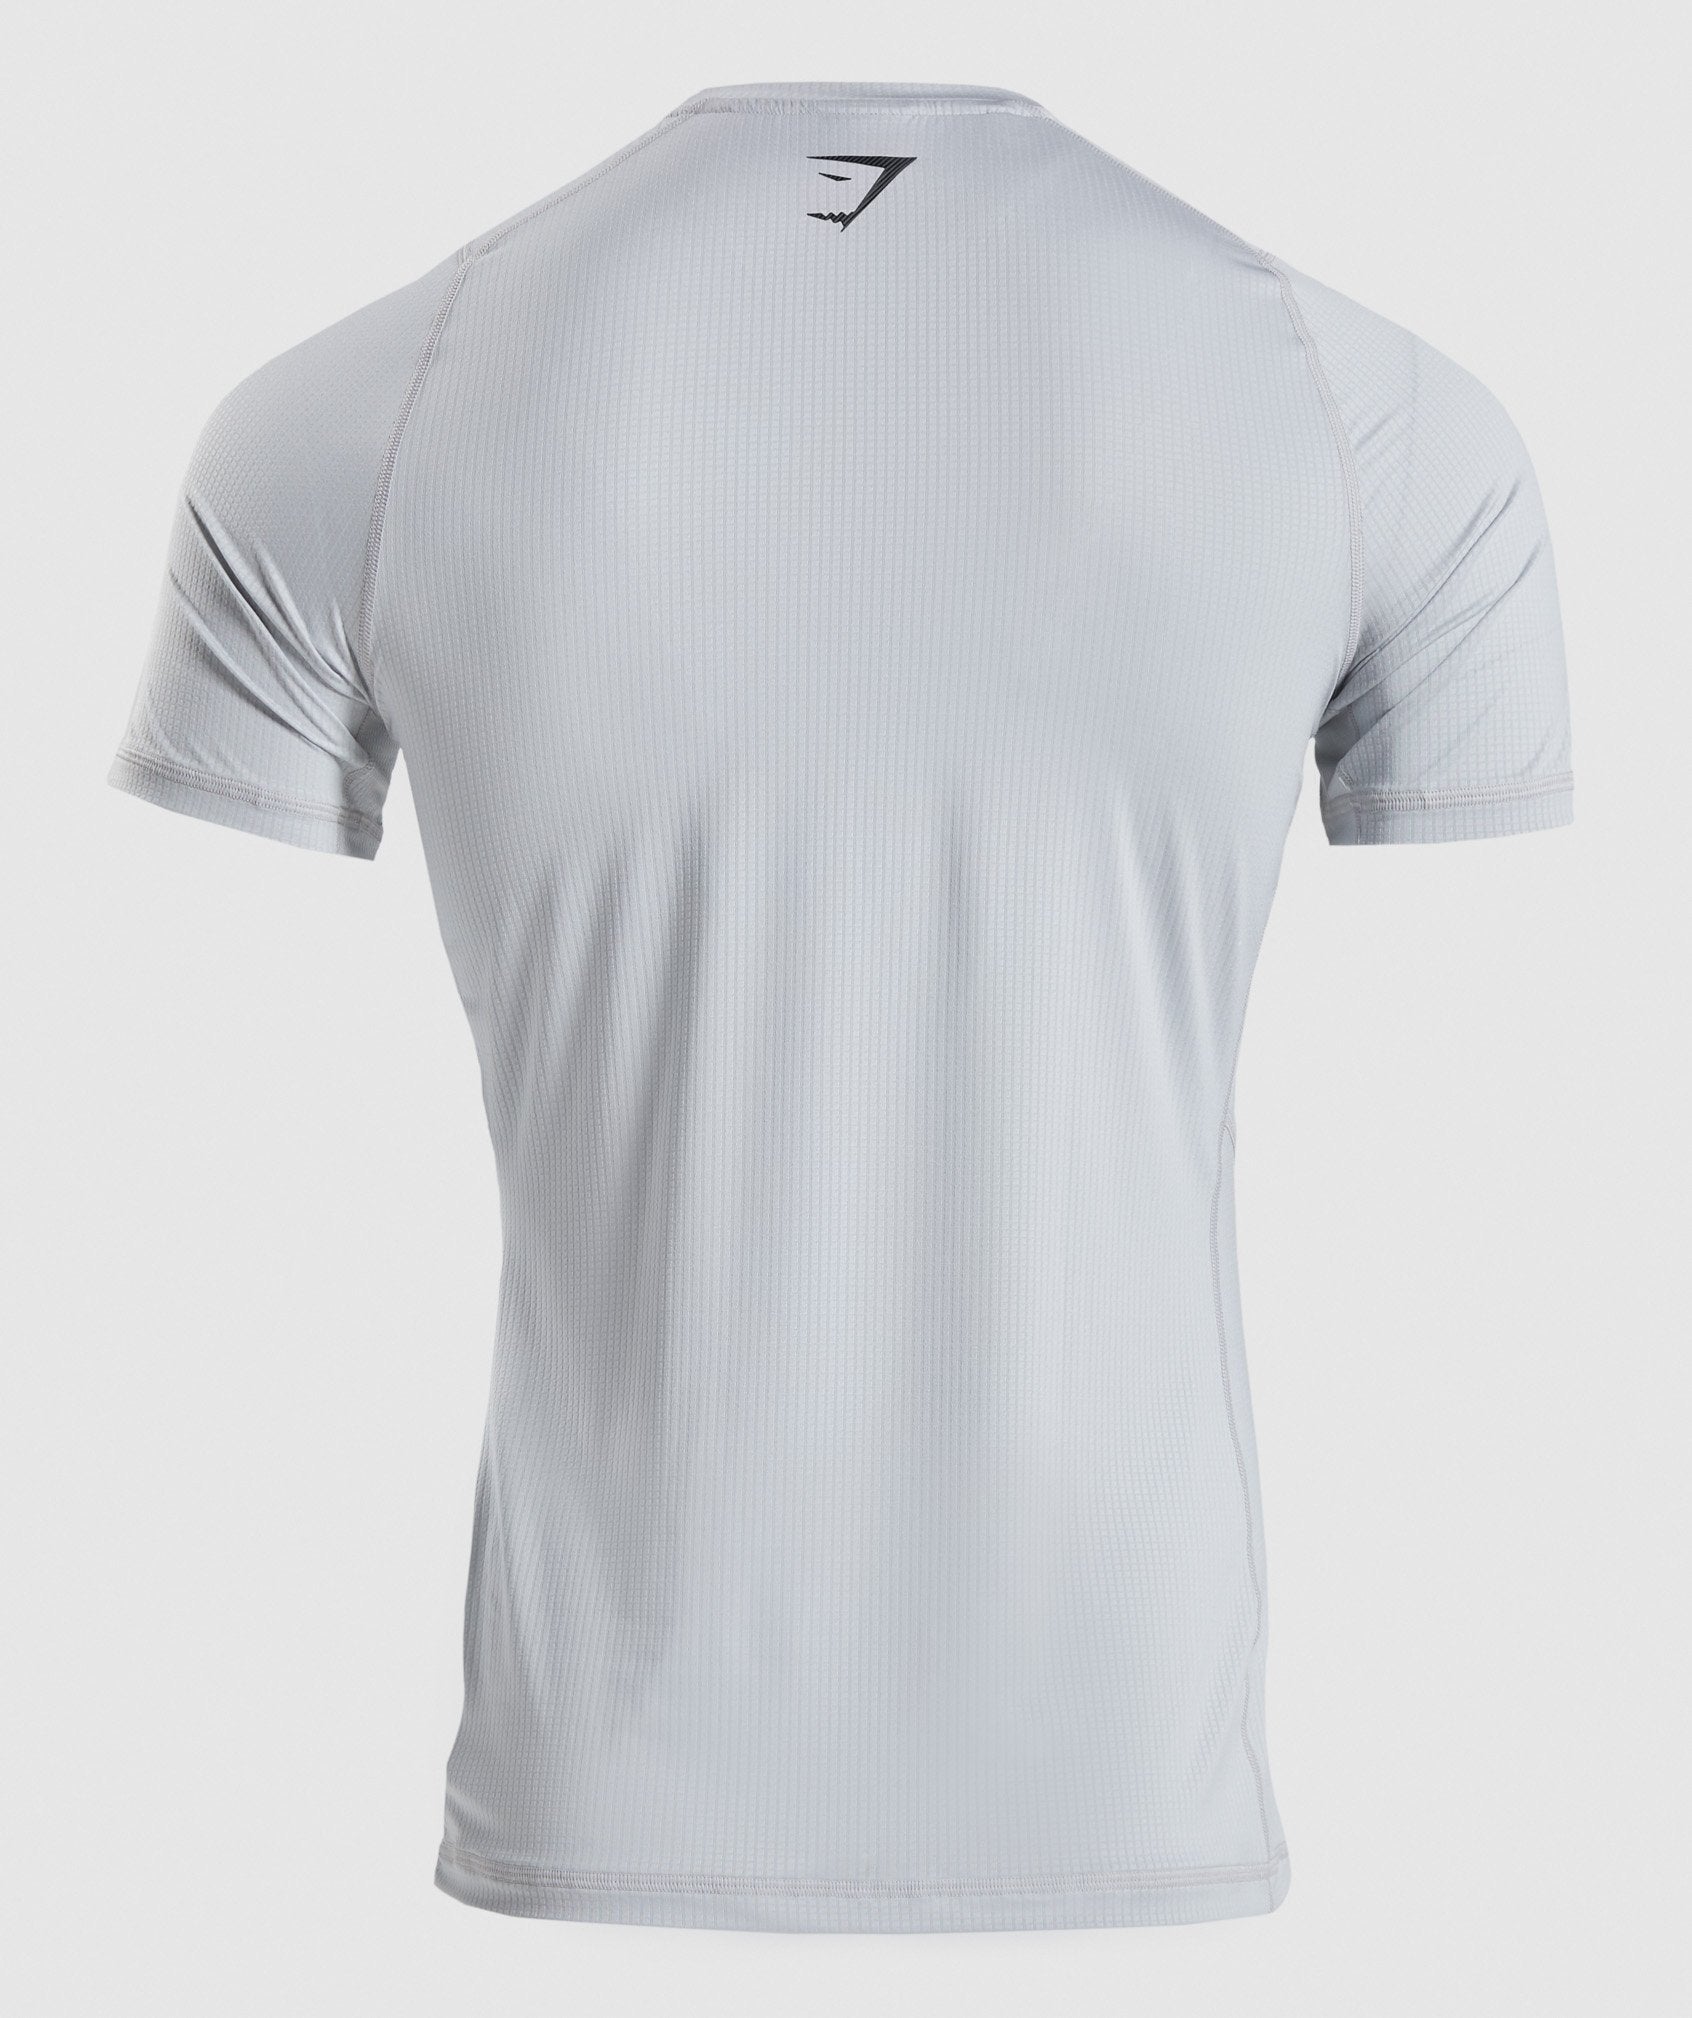 Apex T-Shirt in Grey